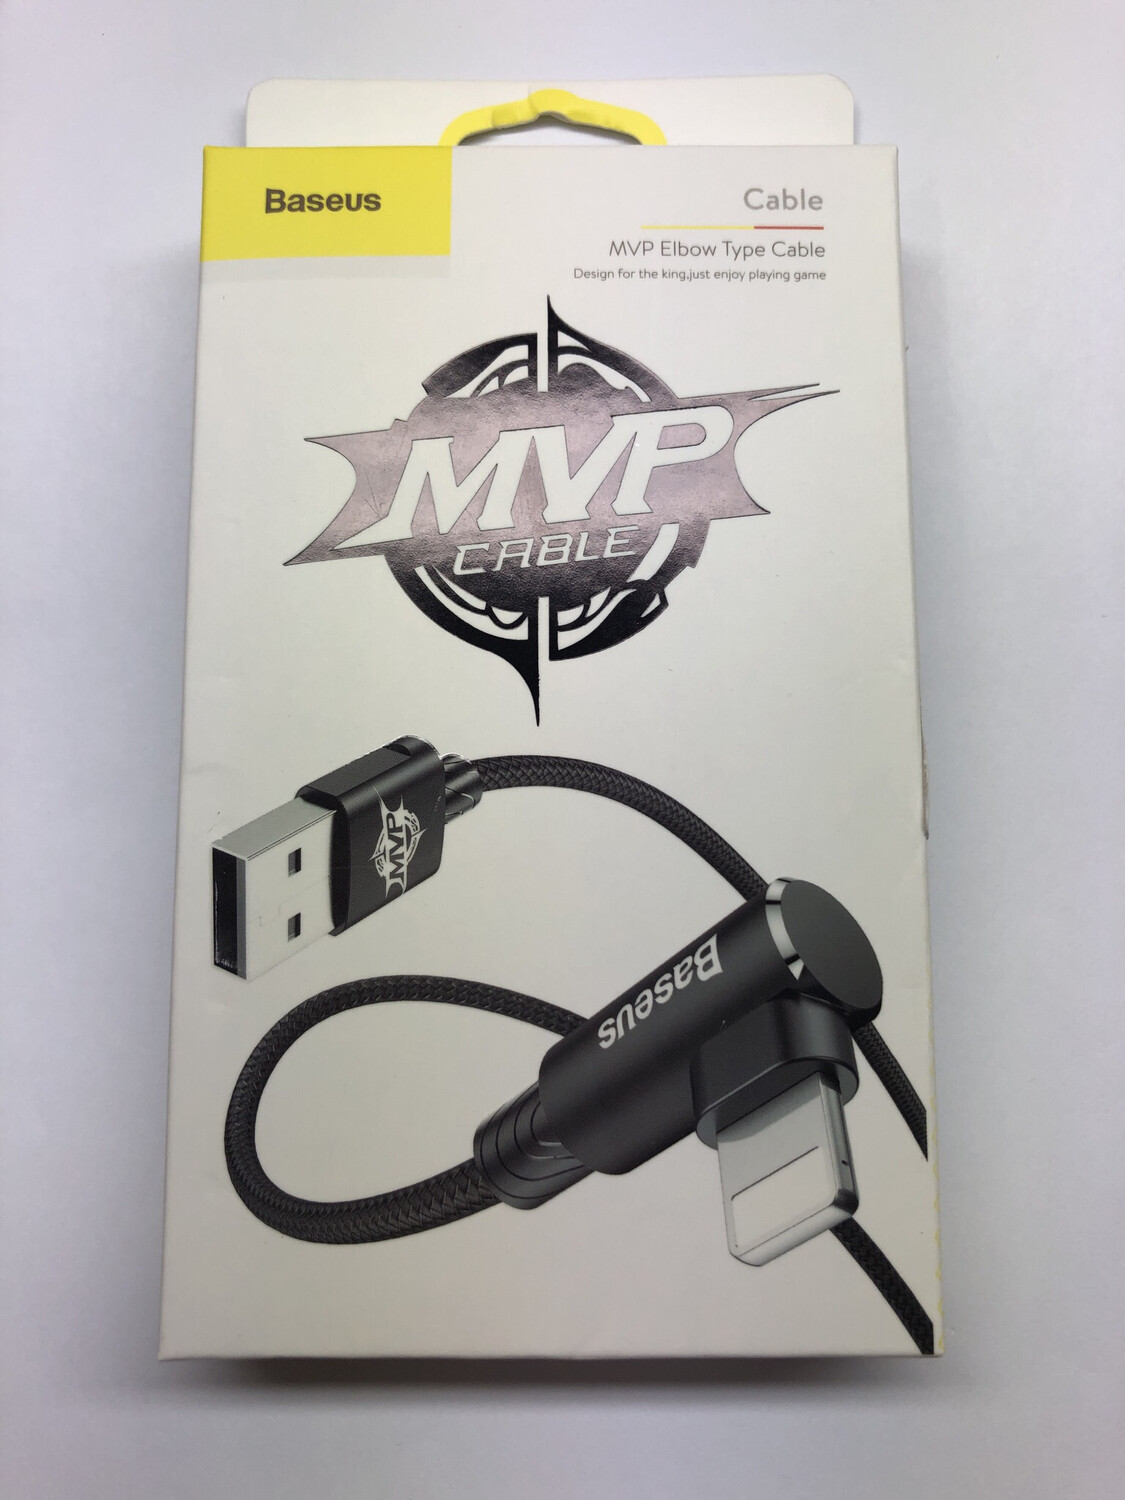 Baseus Cable MVP Eibow Type Cable